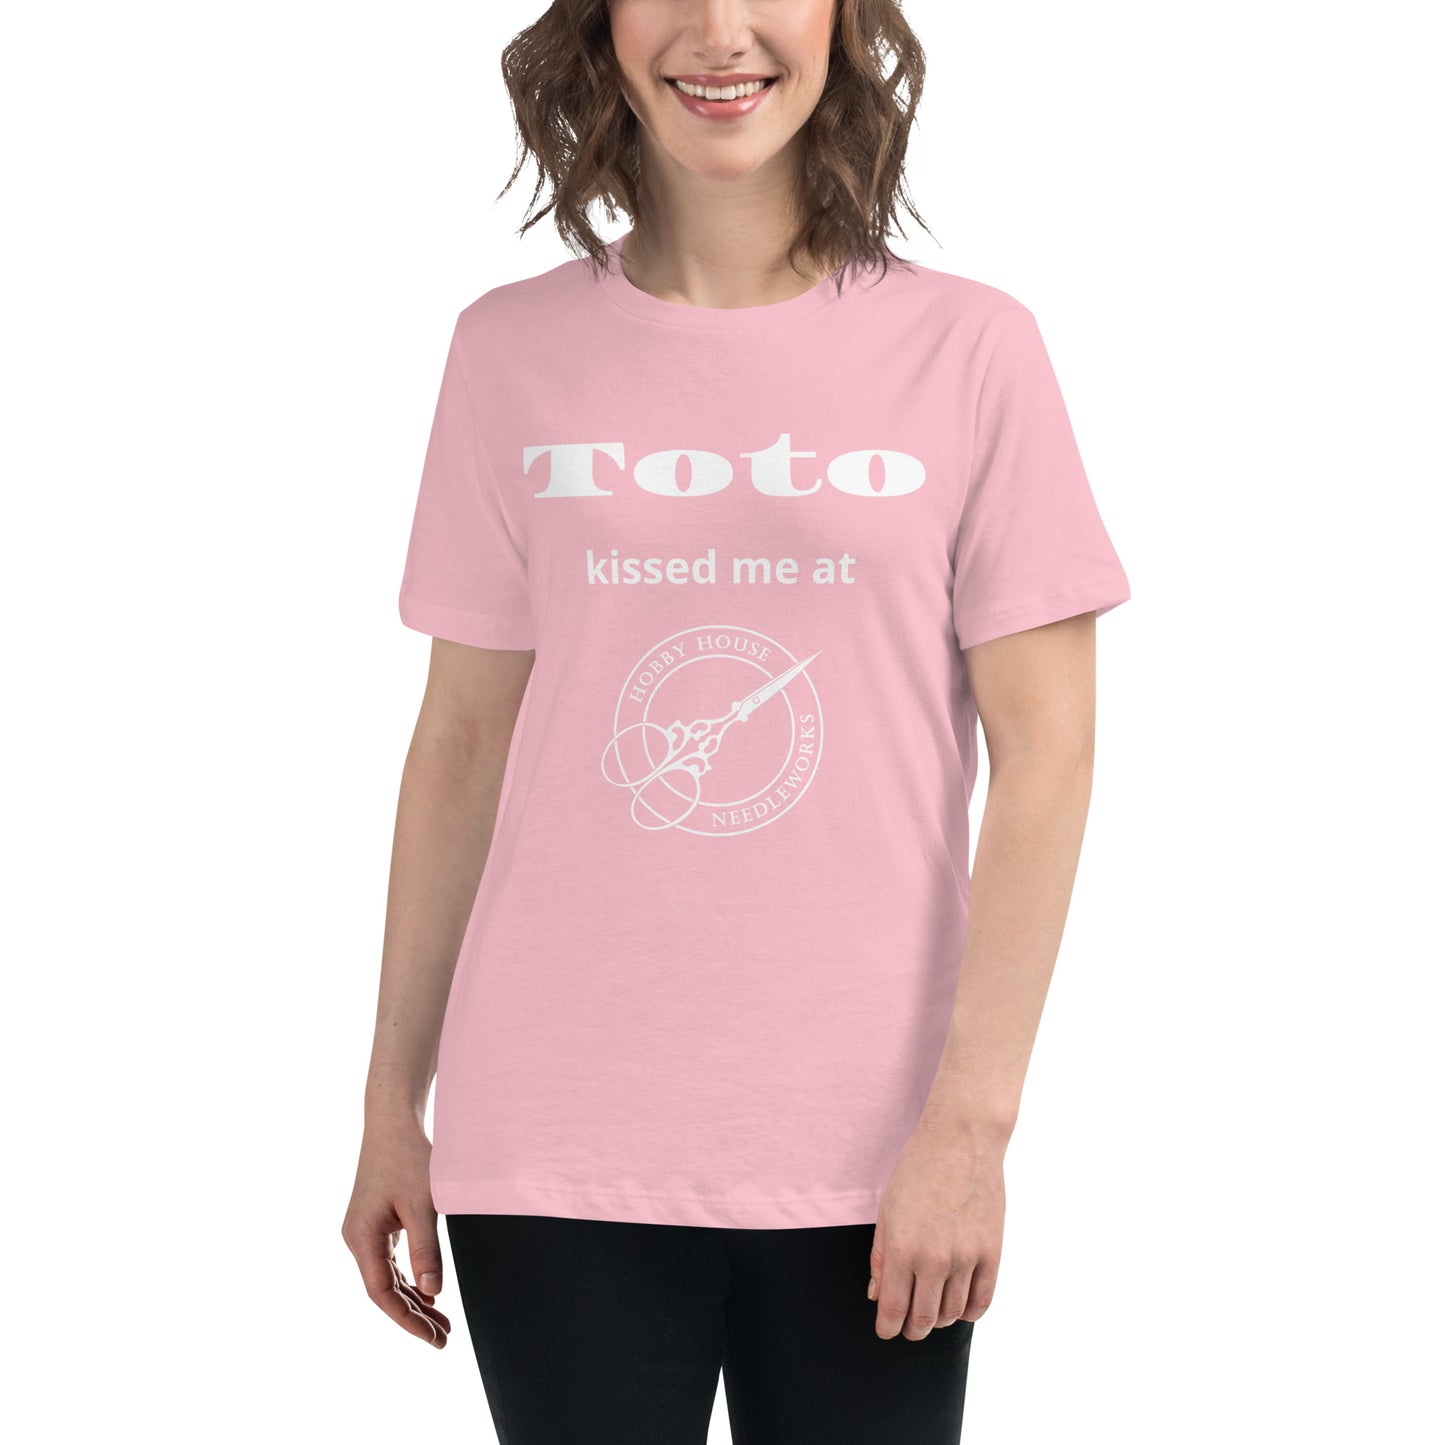 Toto T-Shirt